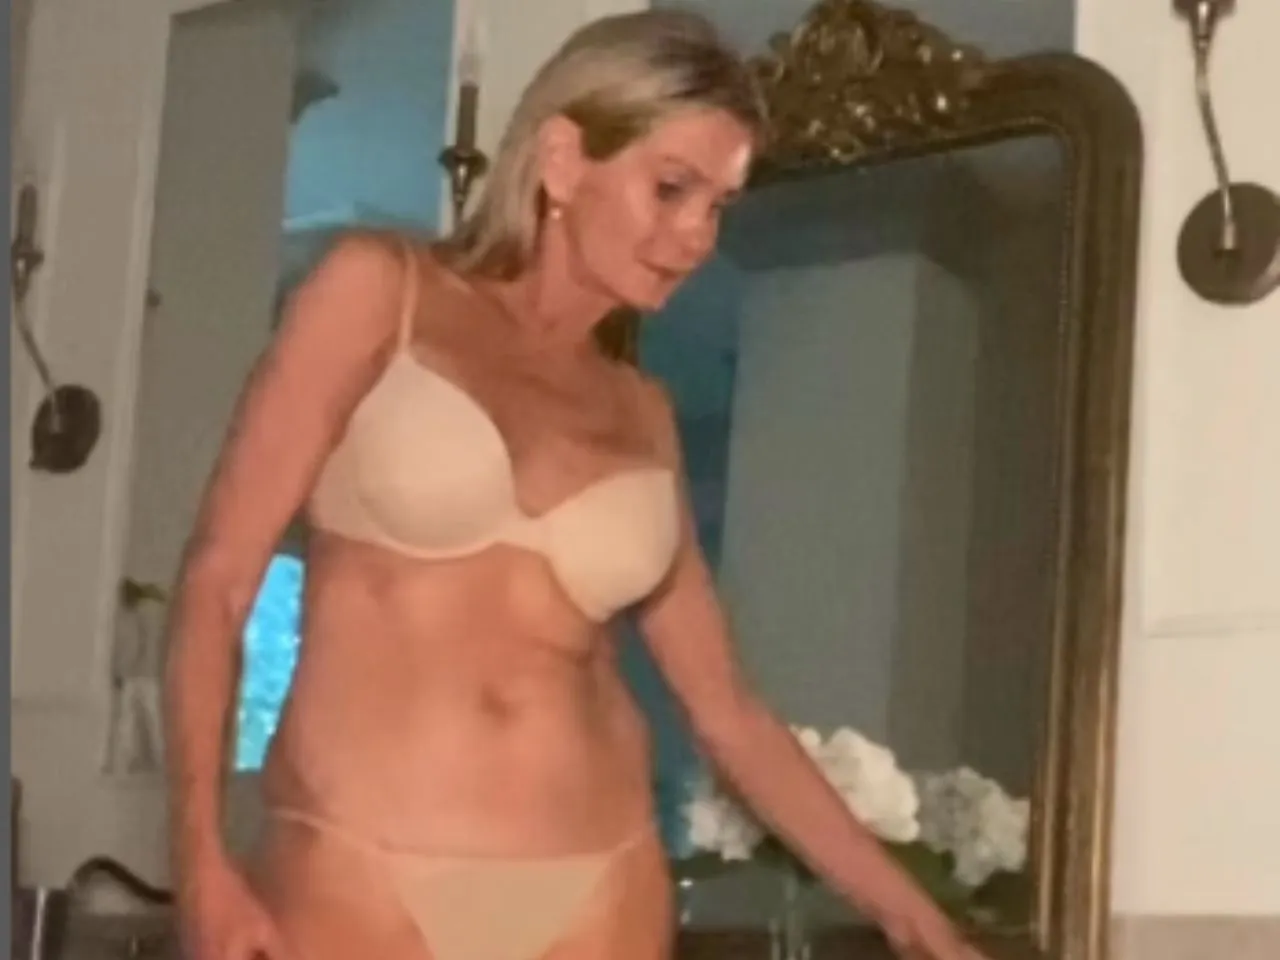 63 Year Old Woman Wears Bikini: Shares Body Positivity Message